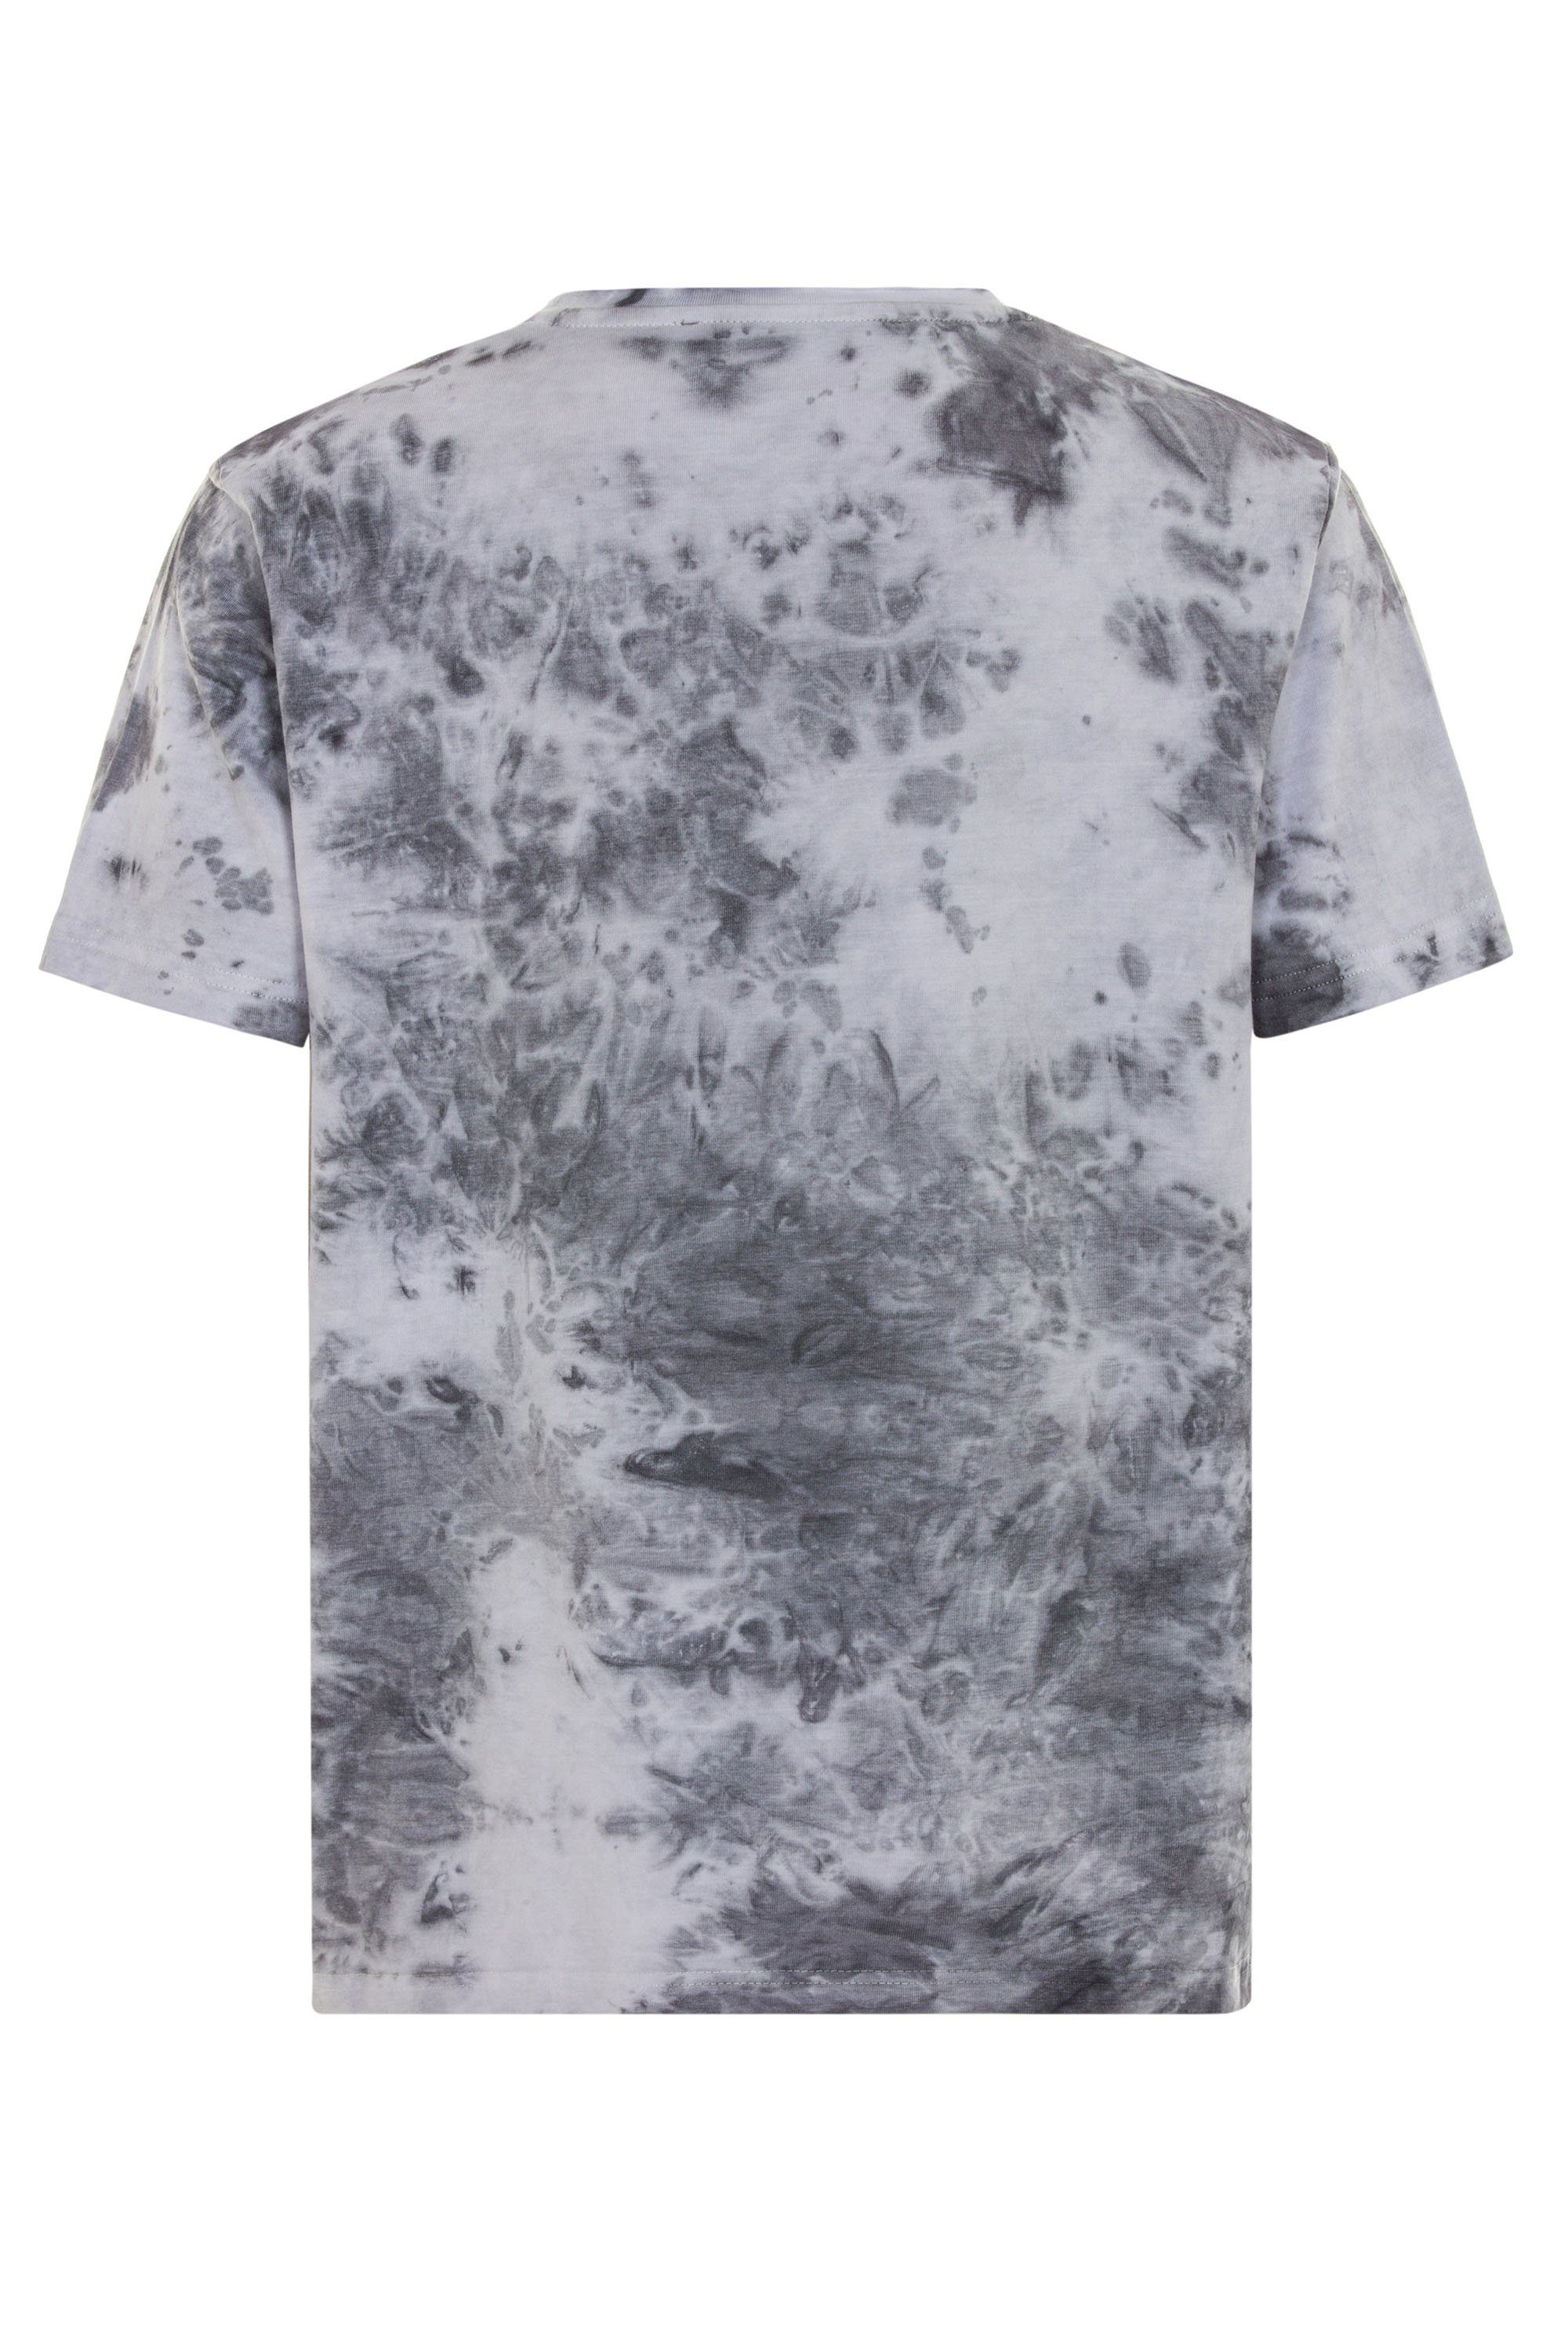 Cipo & Baxx T-Shirt mit Markenprint anthrazit großflächigem